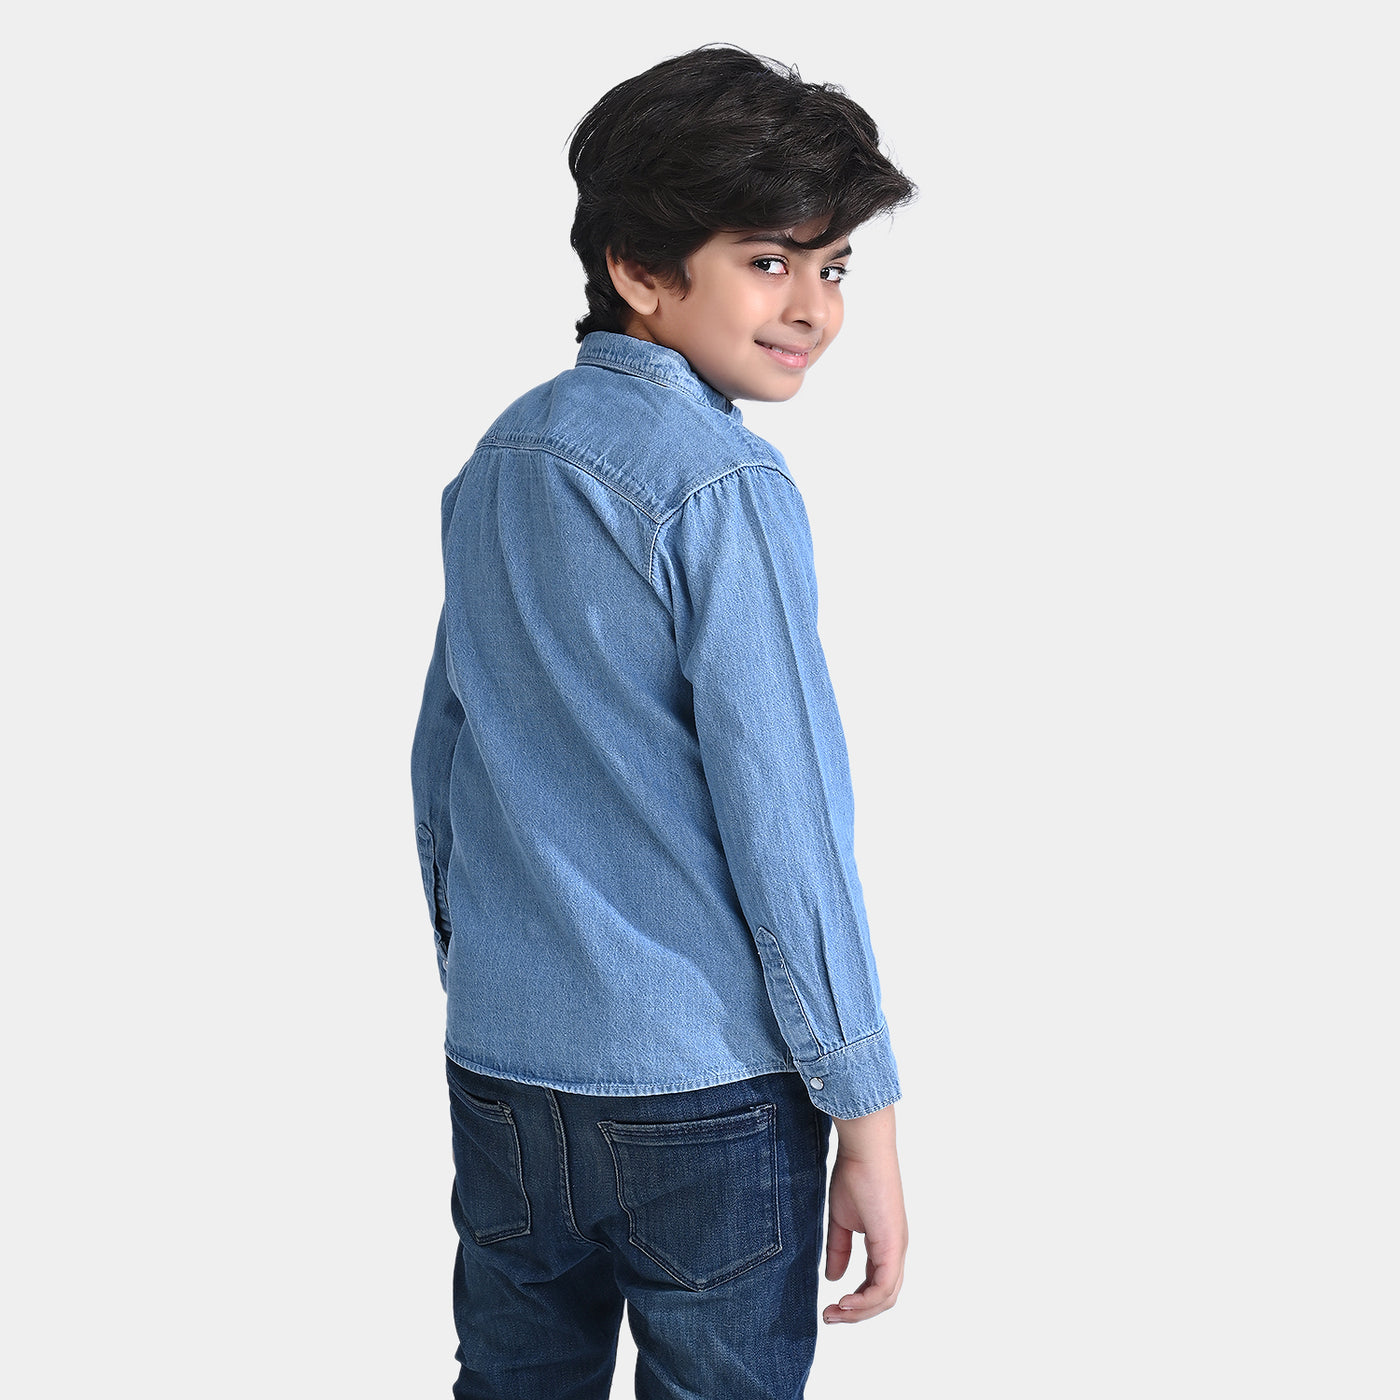 Boys Denim Shirt Pocket Styling-LT.Blue